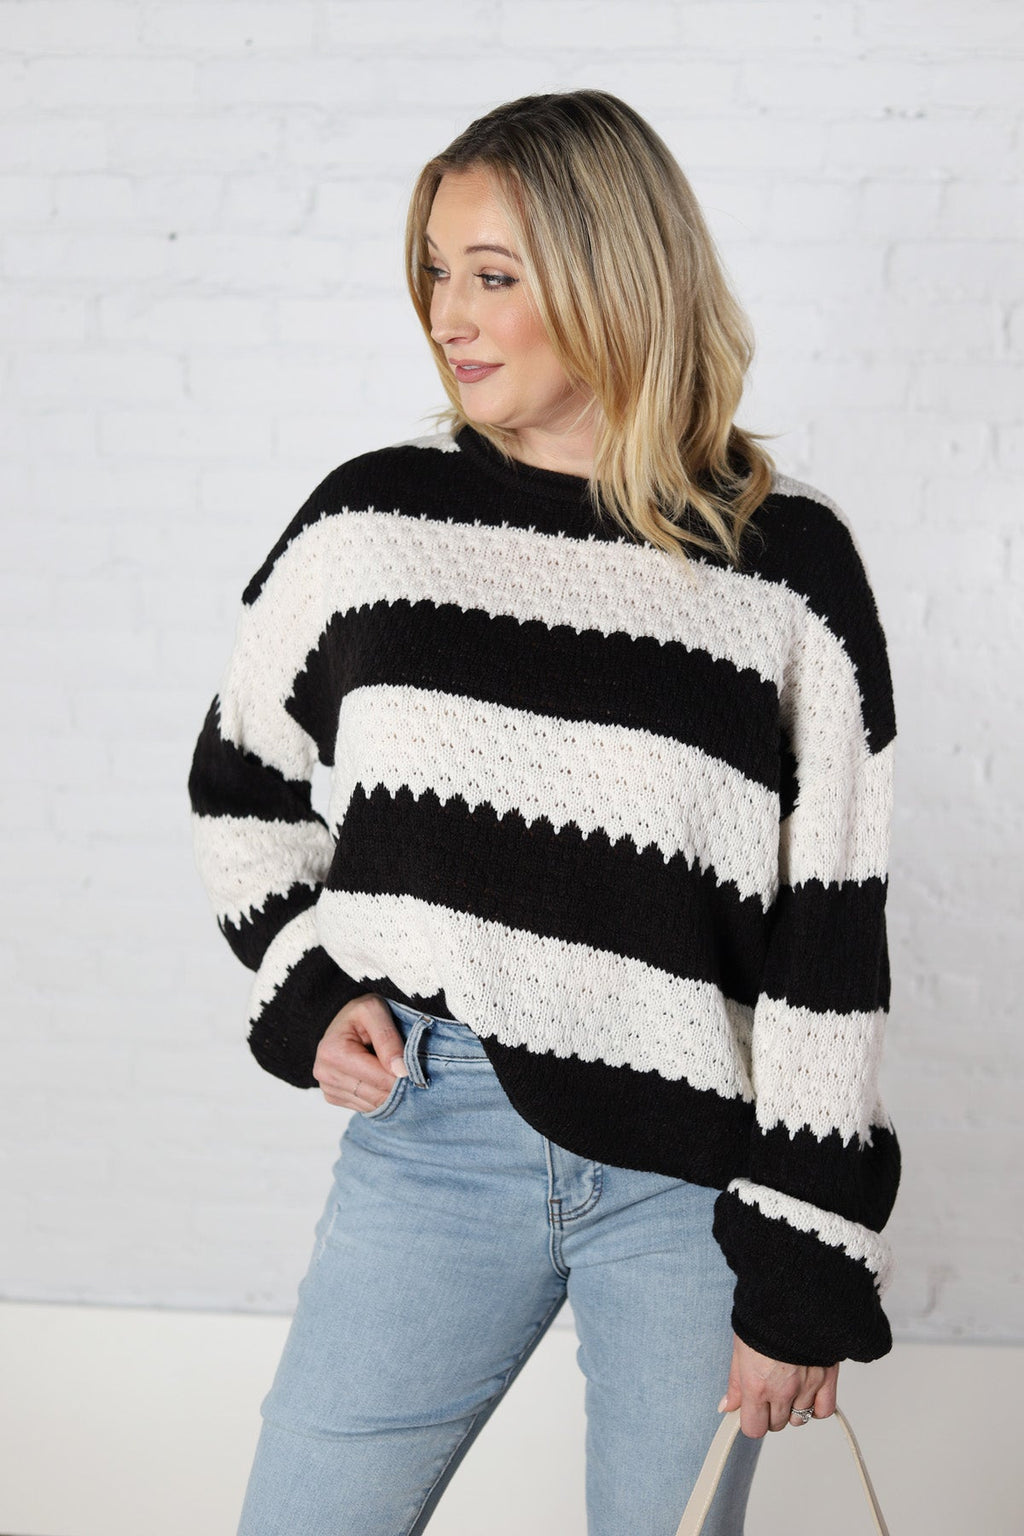 Lesha Striped Crew Neck Sweater - Black